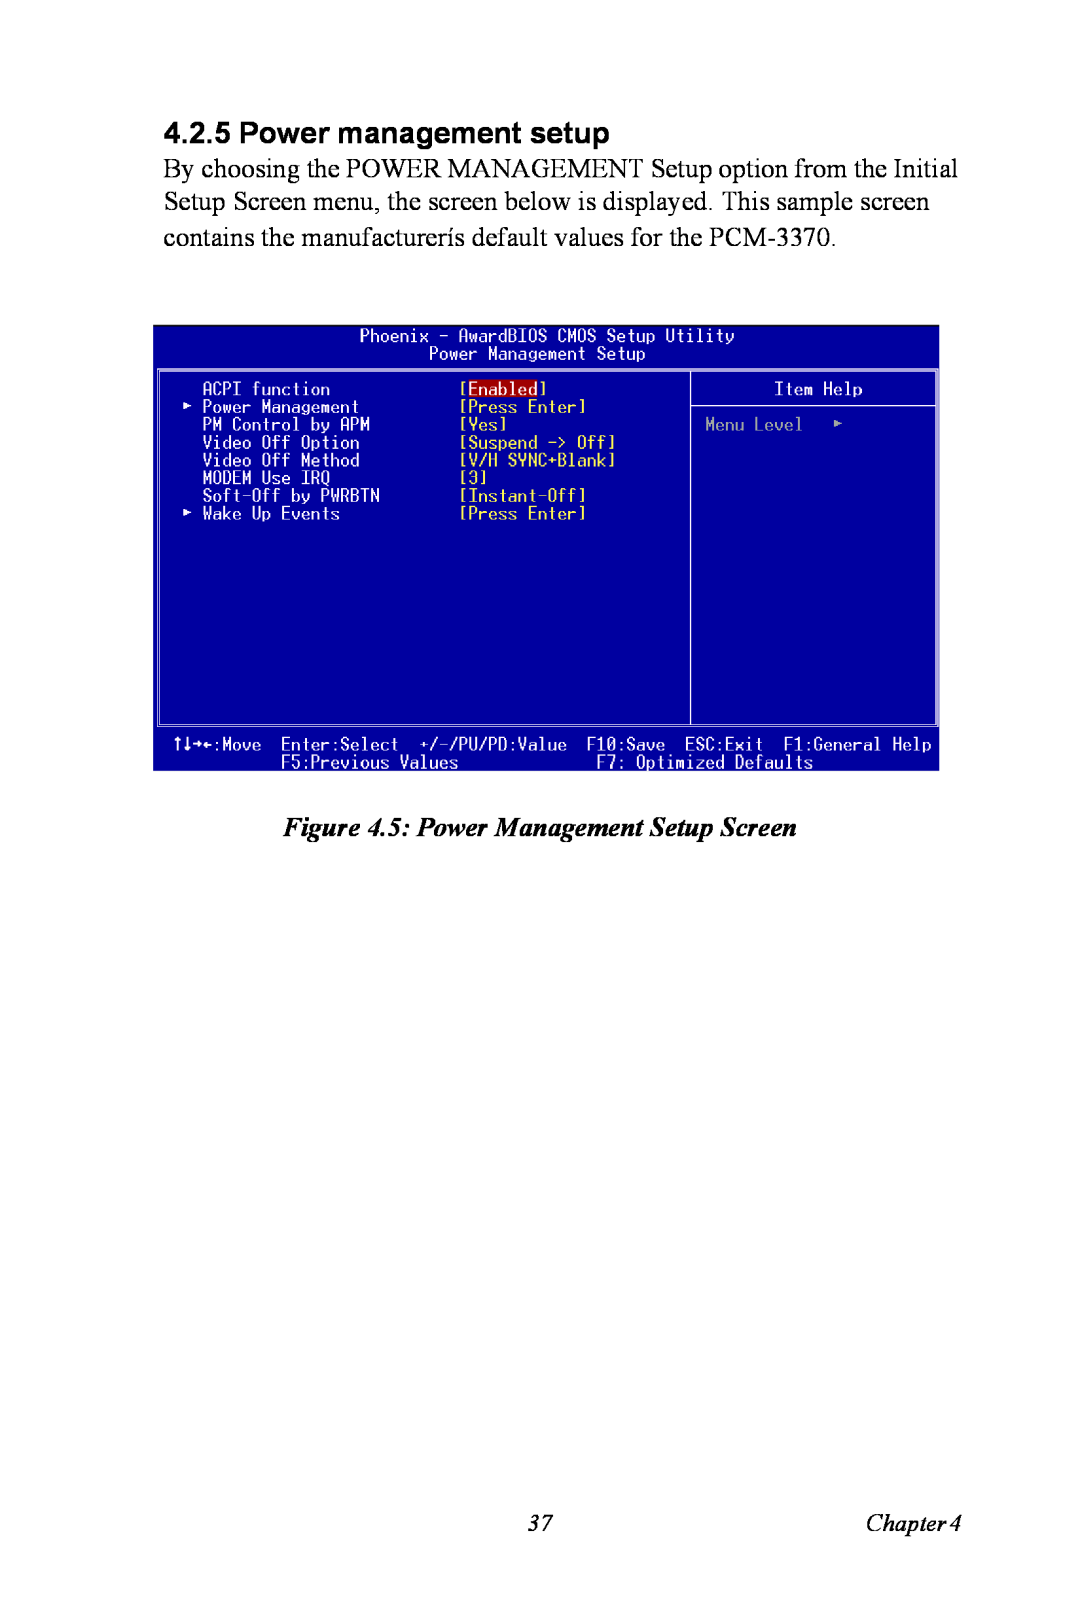 Intel PCM-3370 user manual Power management setup, 5 Power Management Setup Screen 